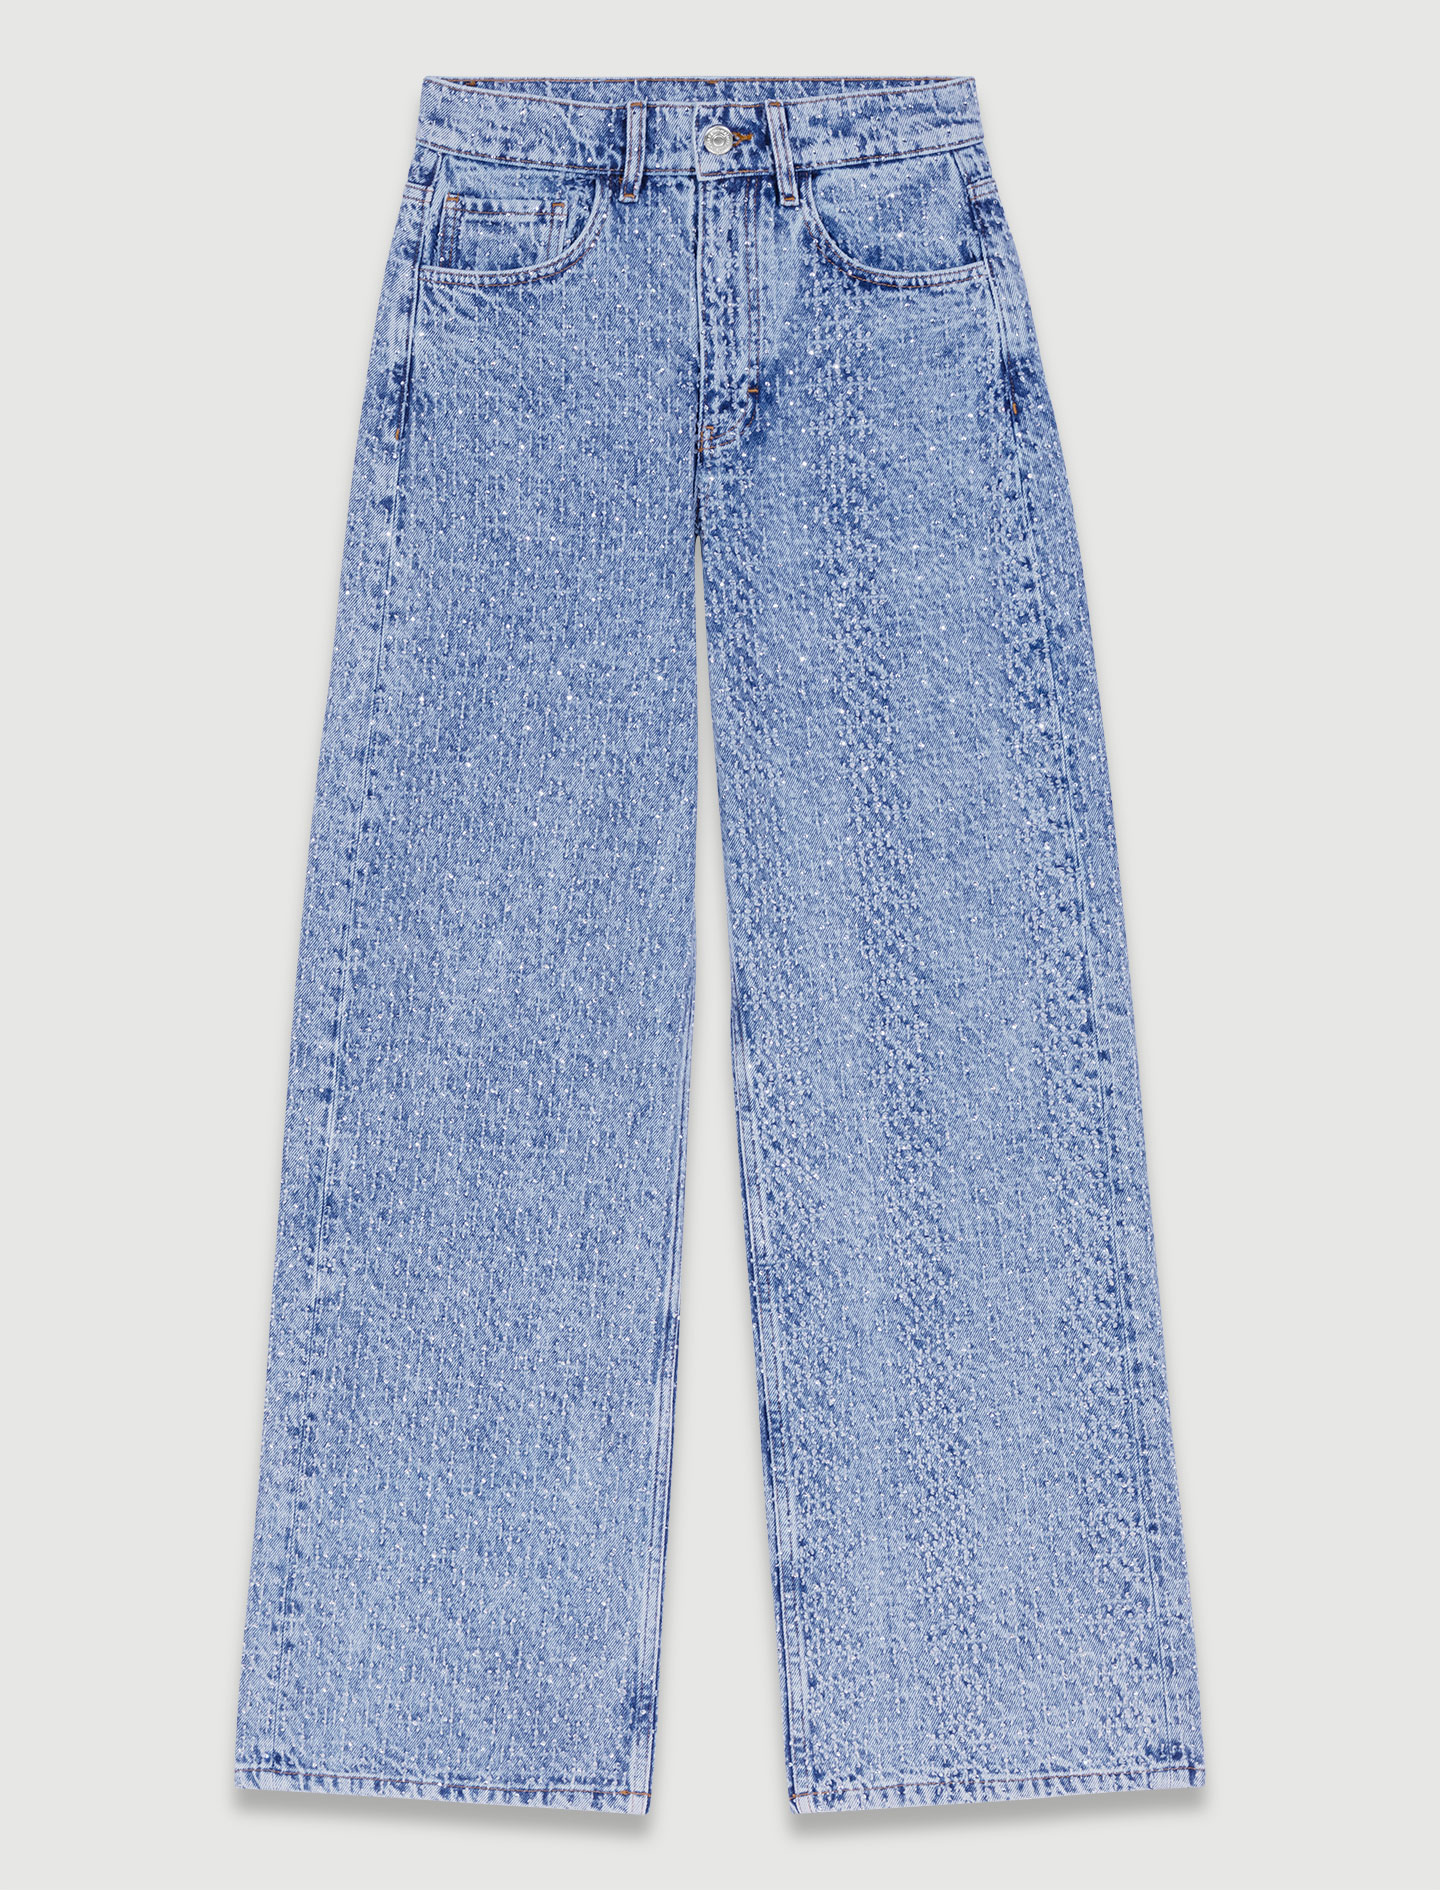 Rhinestone faded jeans - Blue